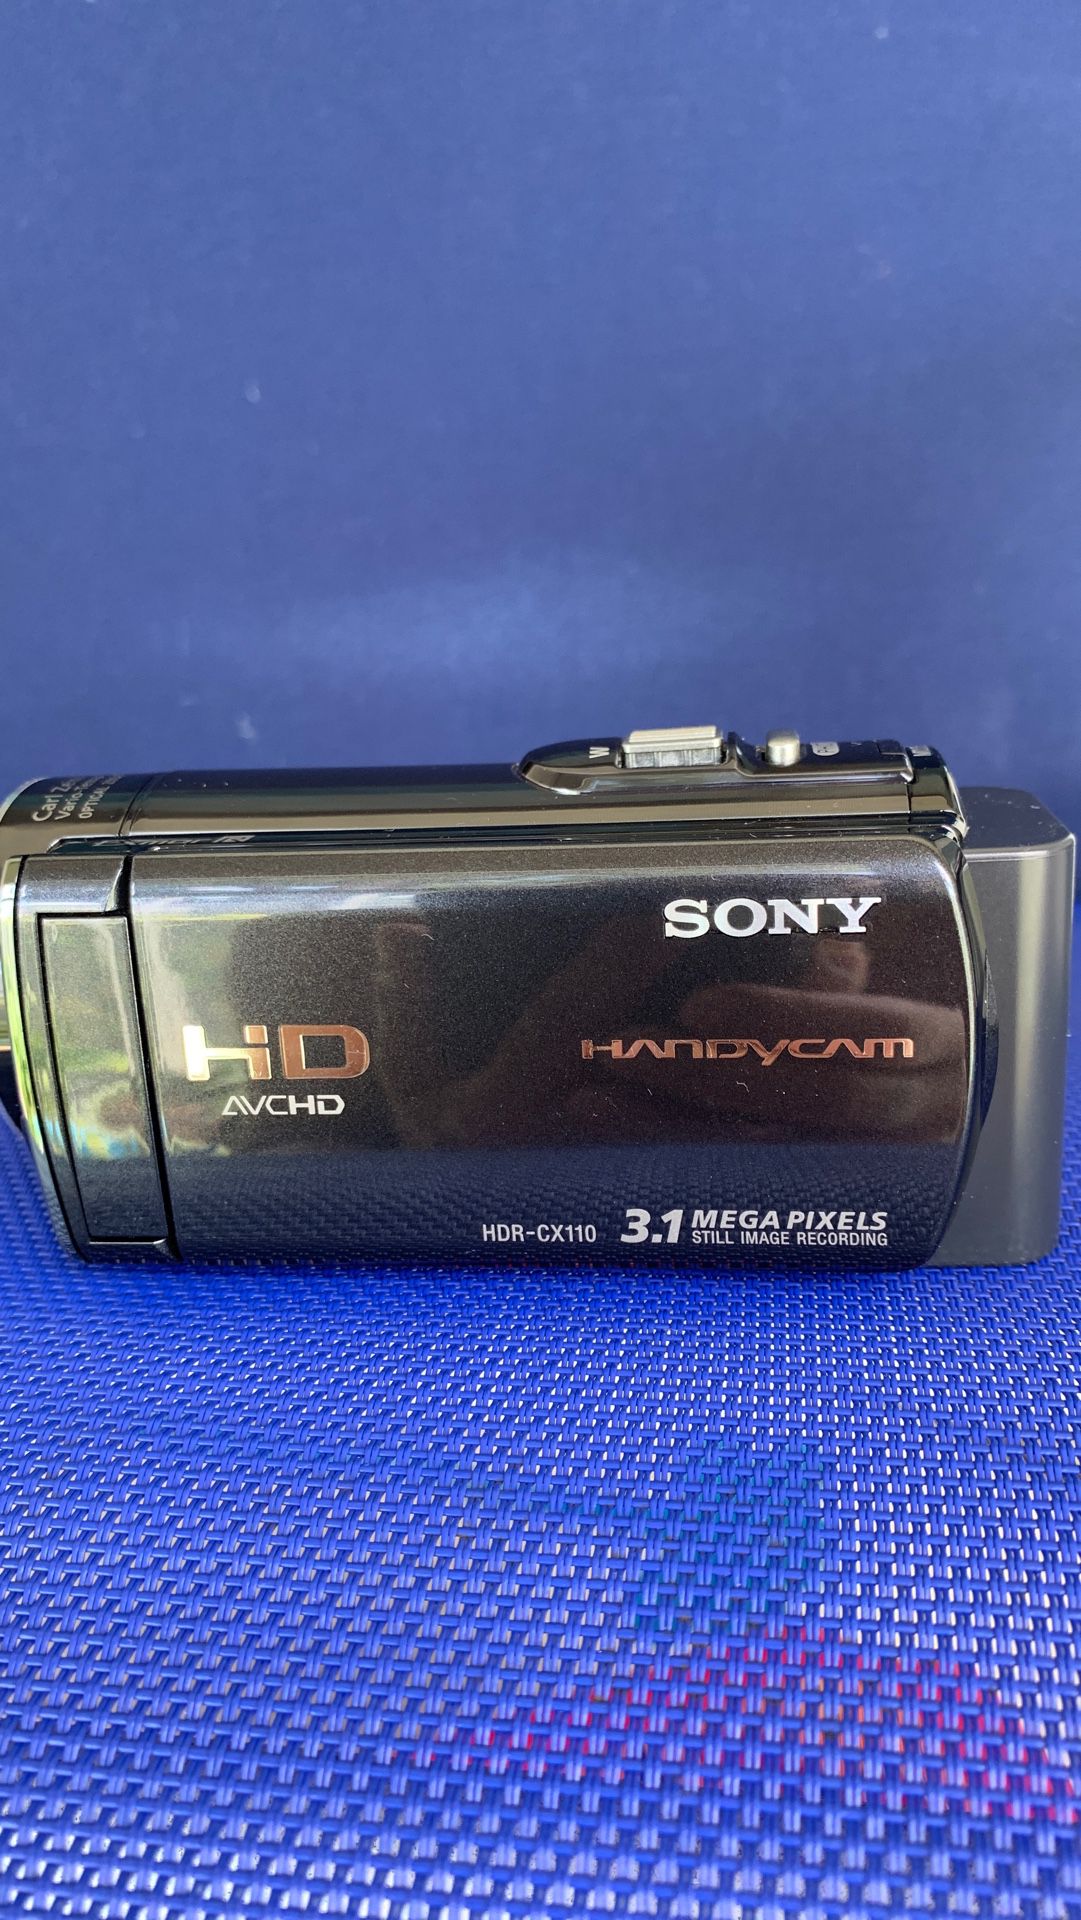 Sony HD video camera